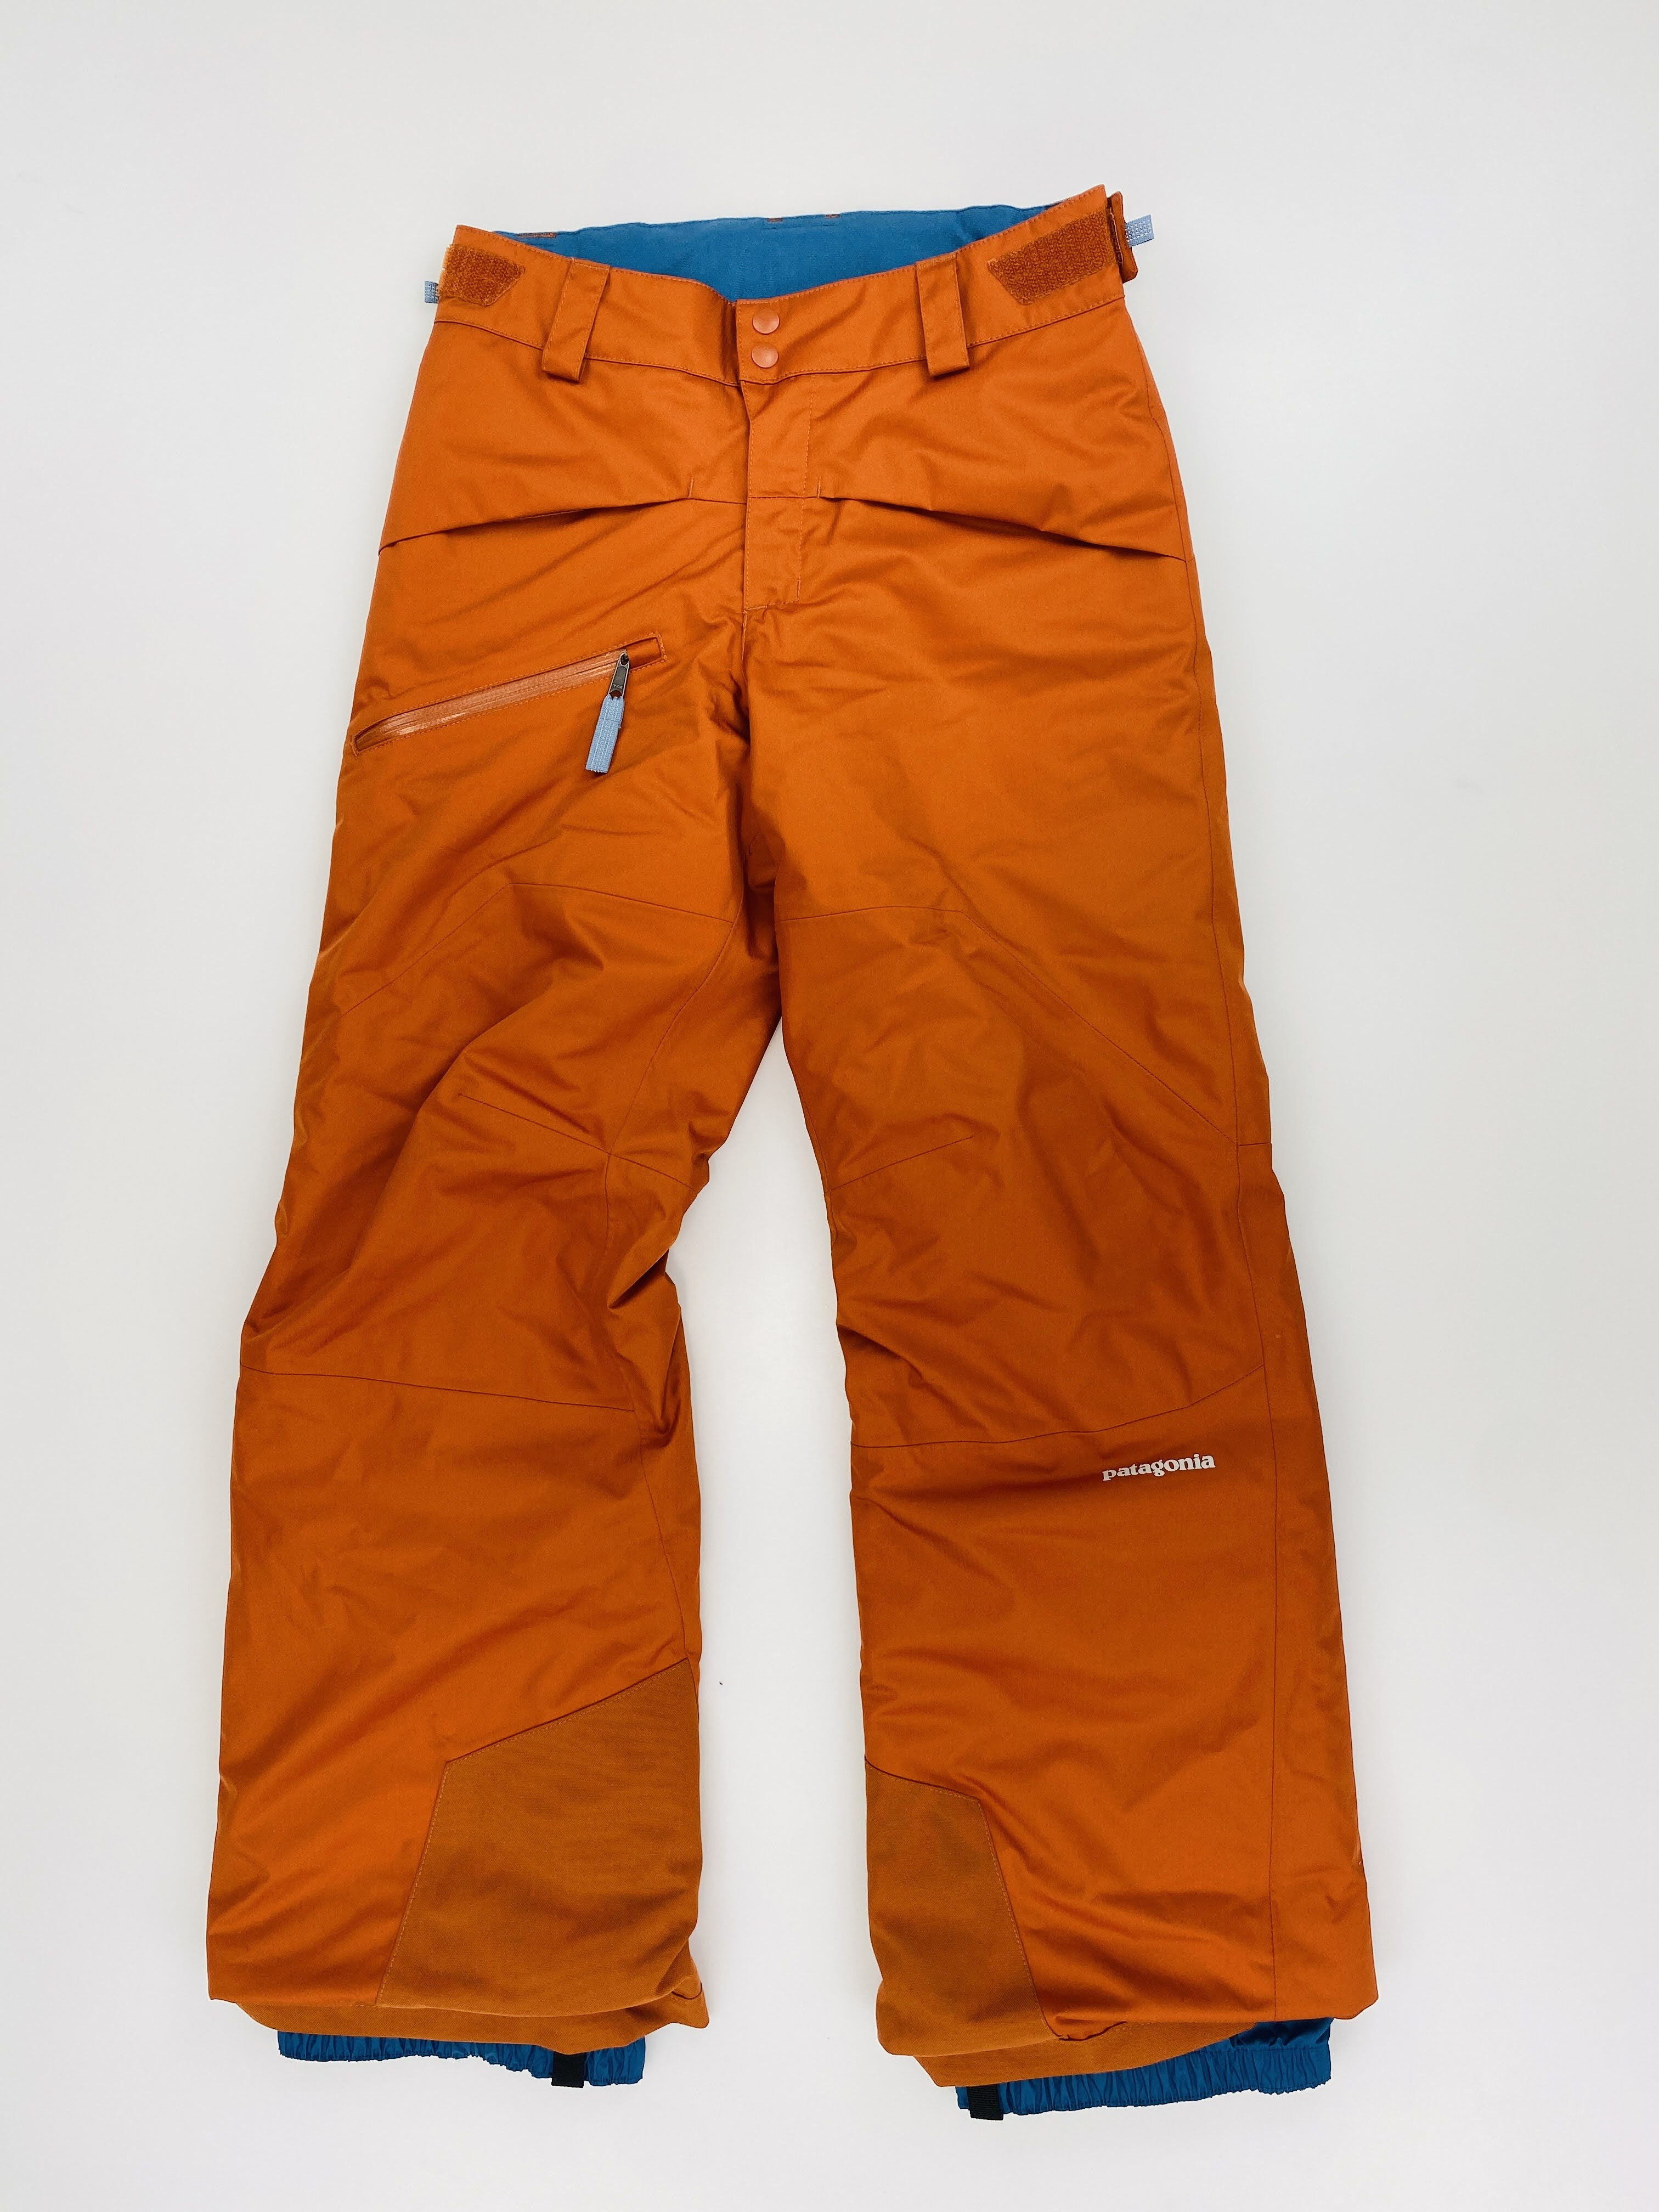 Patagonia Boys' Snowshot Pants - Second Hand Lasketteluhousut - Lasten - Oranssi - M | Hardloop